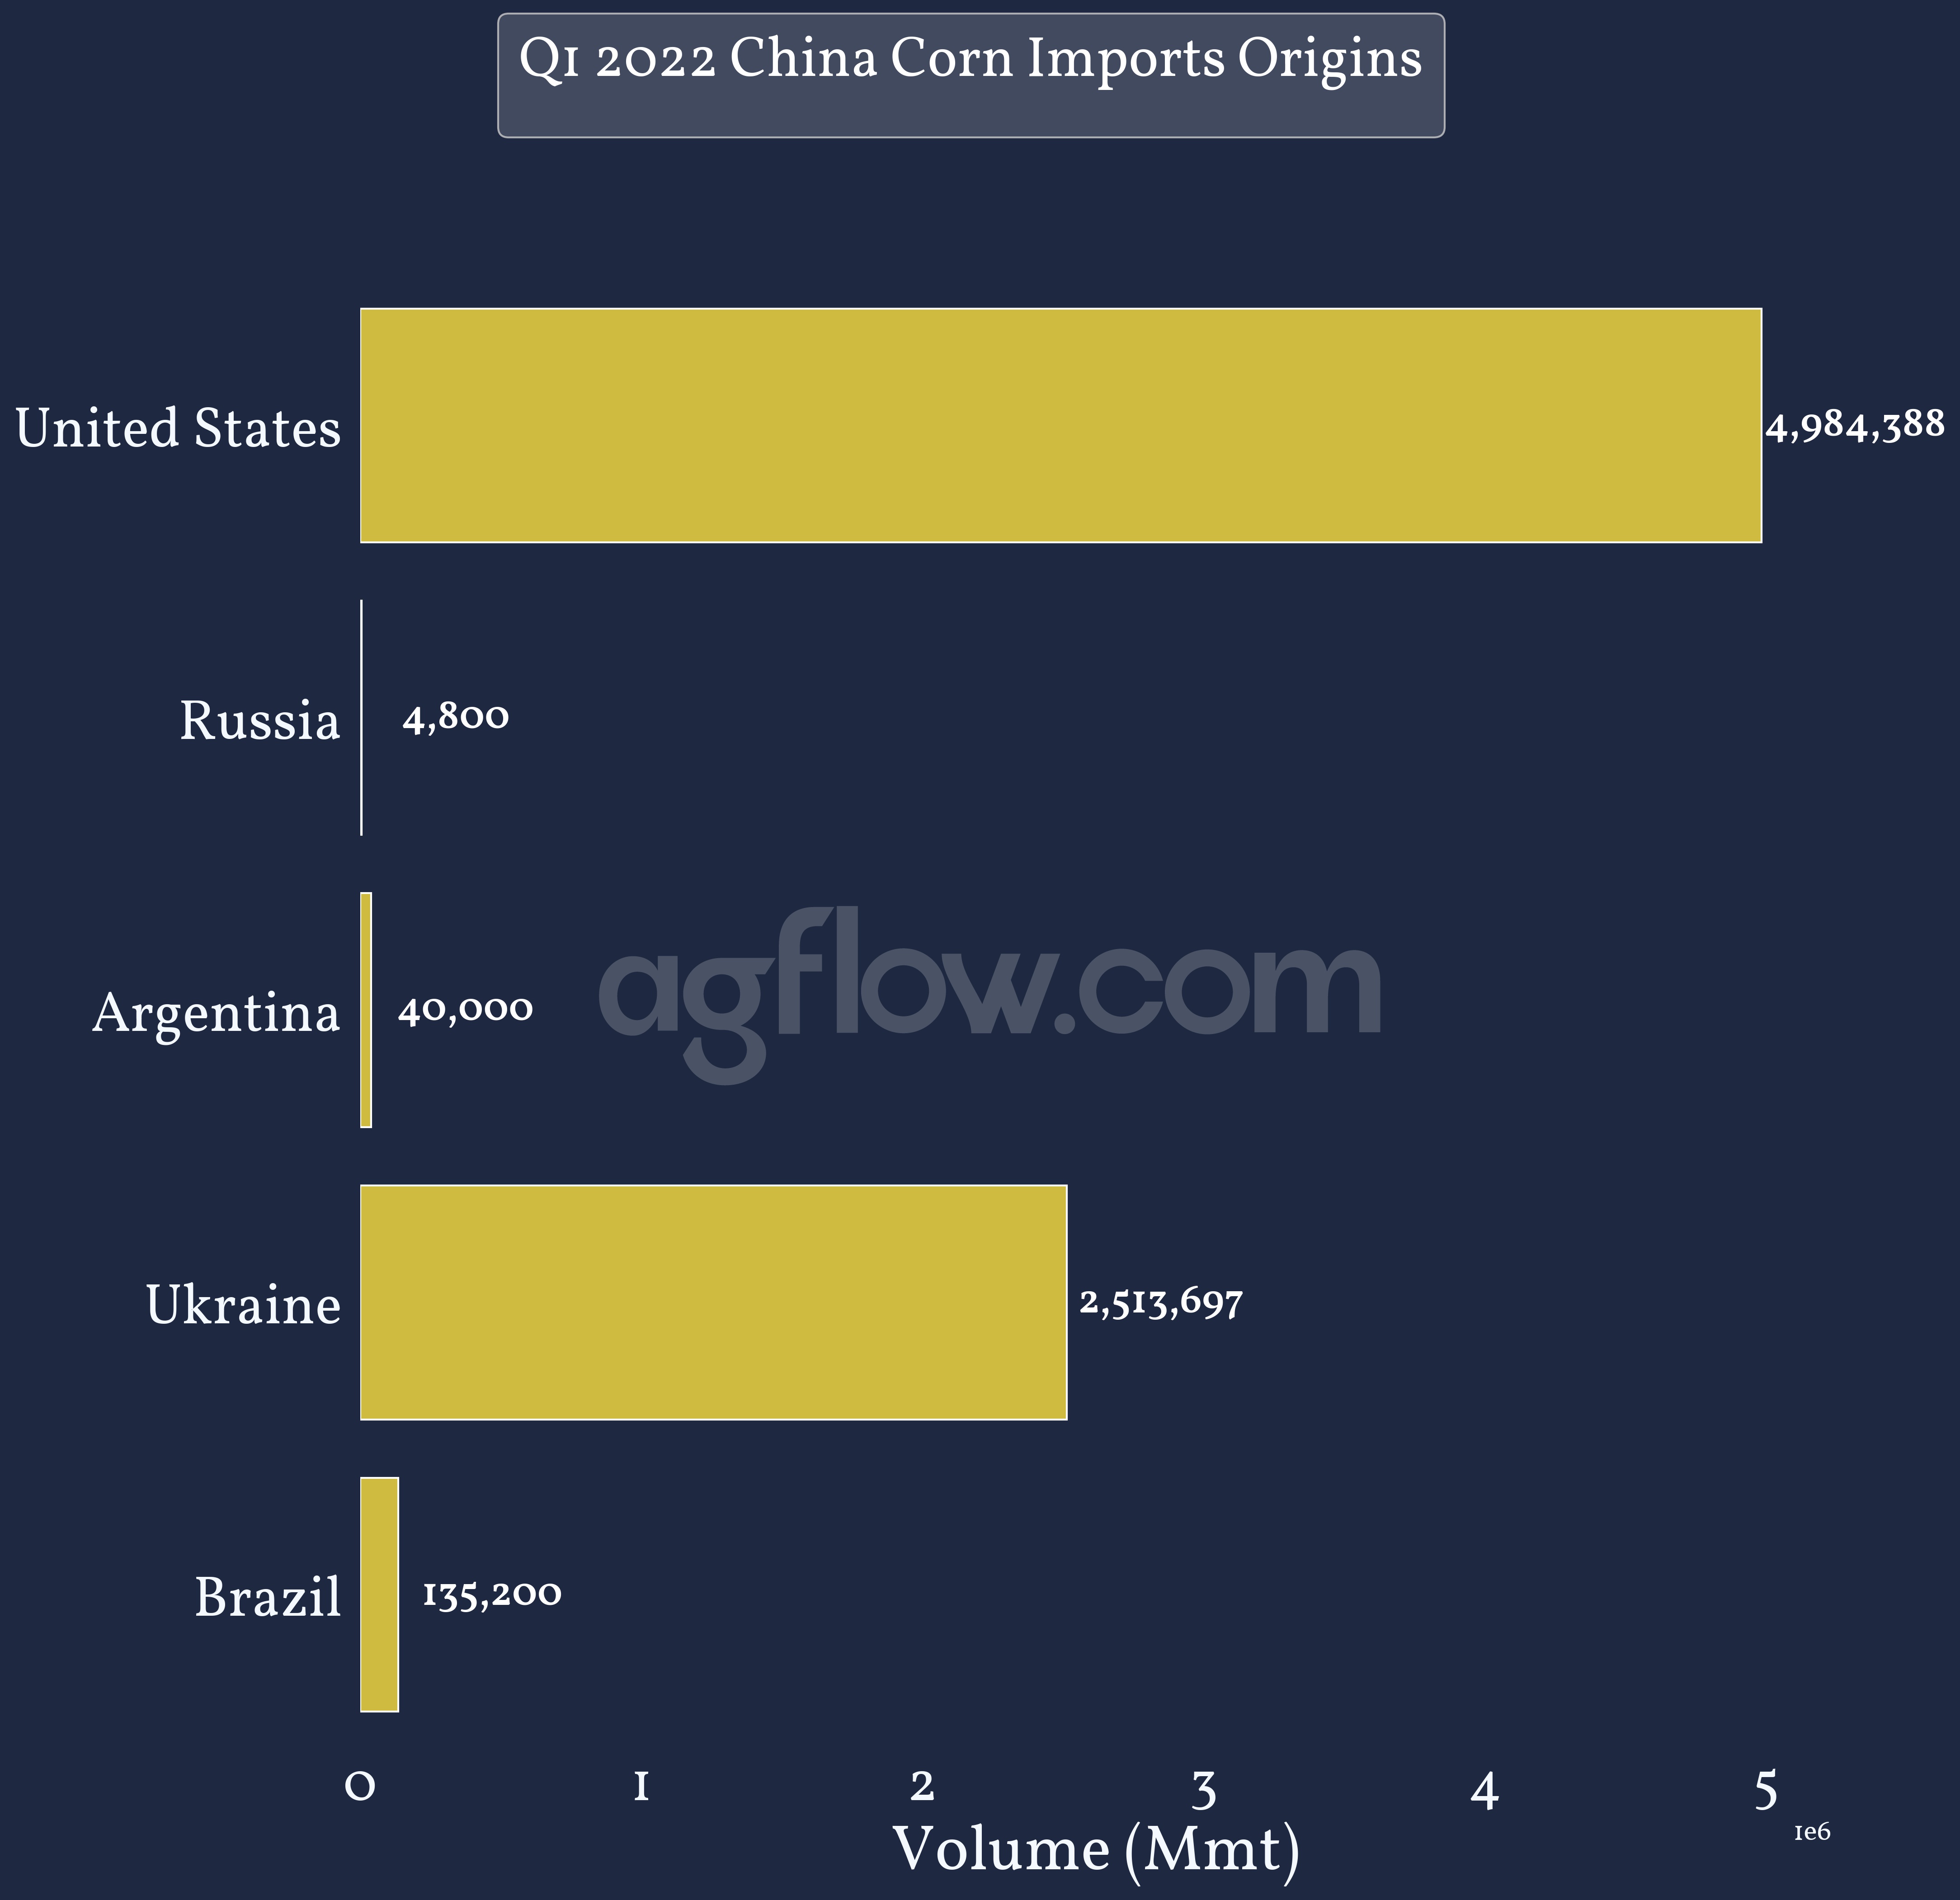 Q1 2022 China Corn Imports